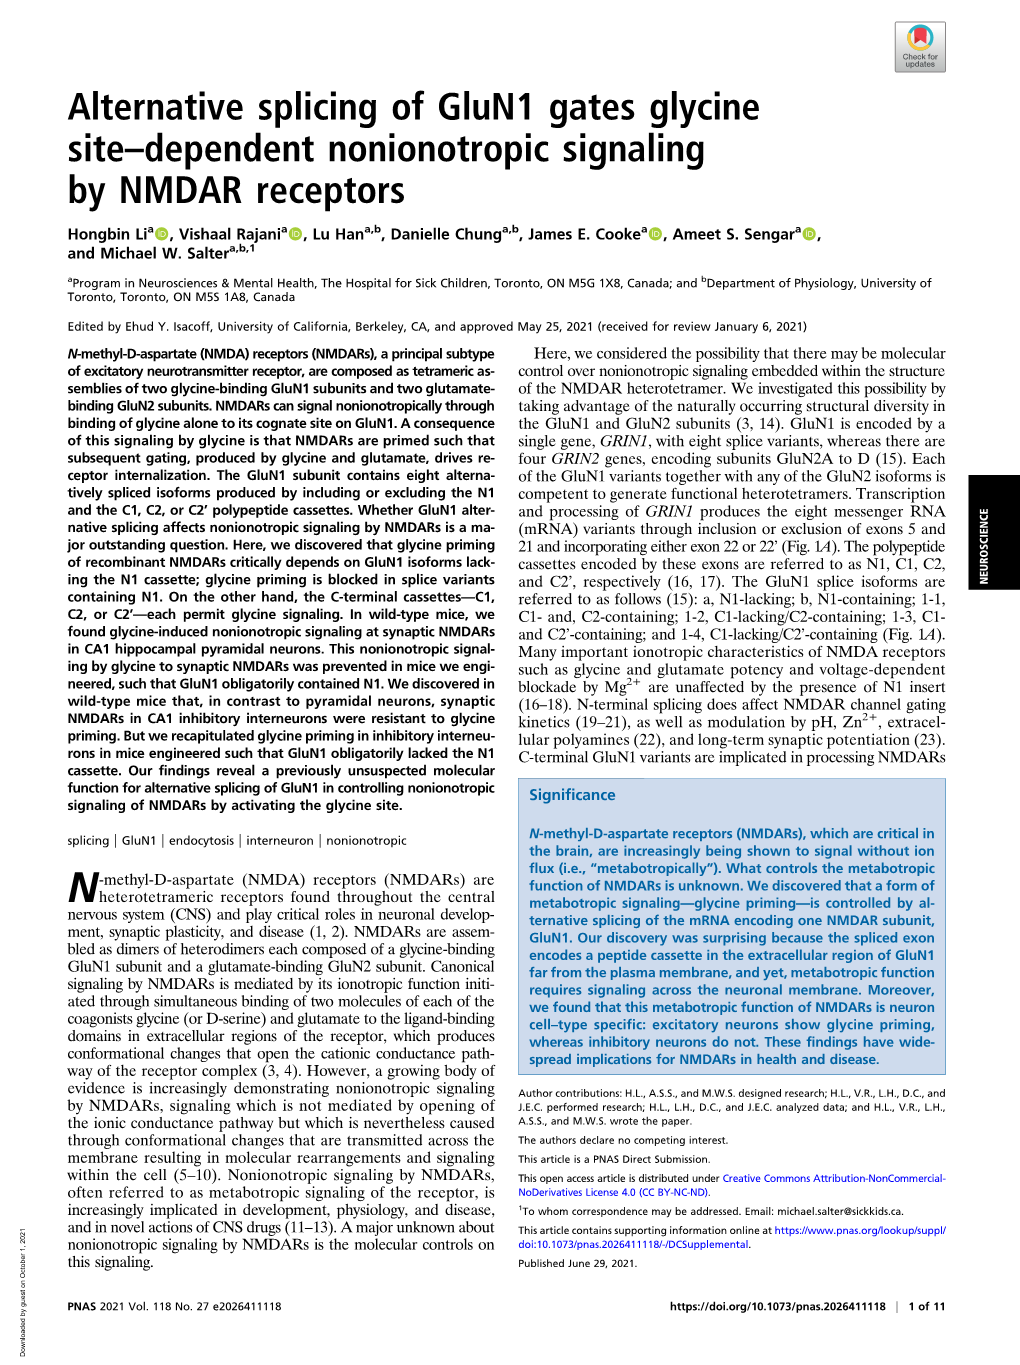 Alternative Splicing of Glun1 Gates Glycine Site–Dependent Nonionotropic Signaling by NMDAR Receptors